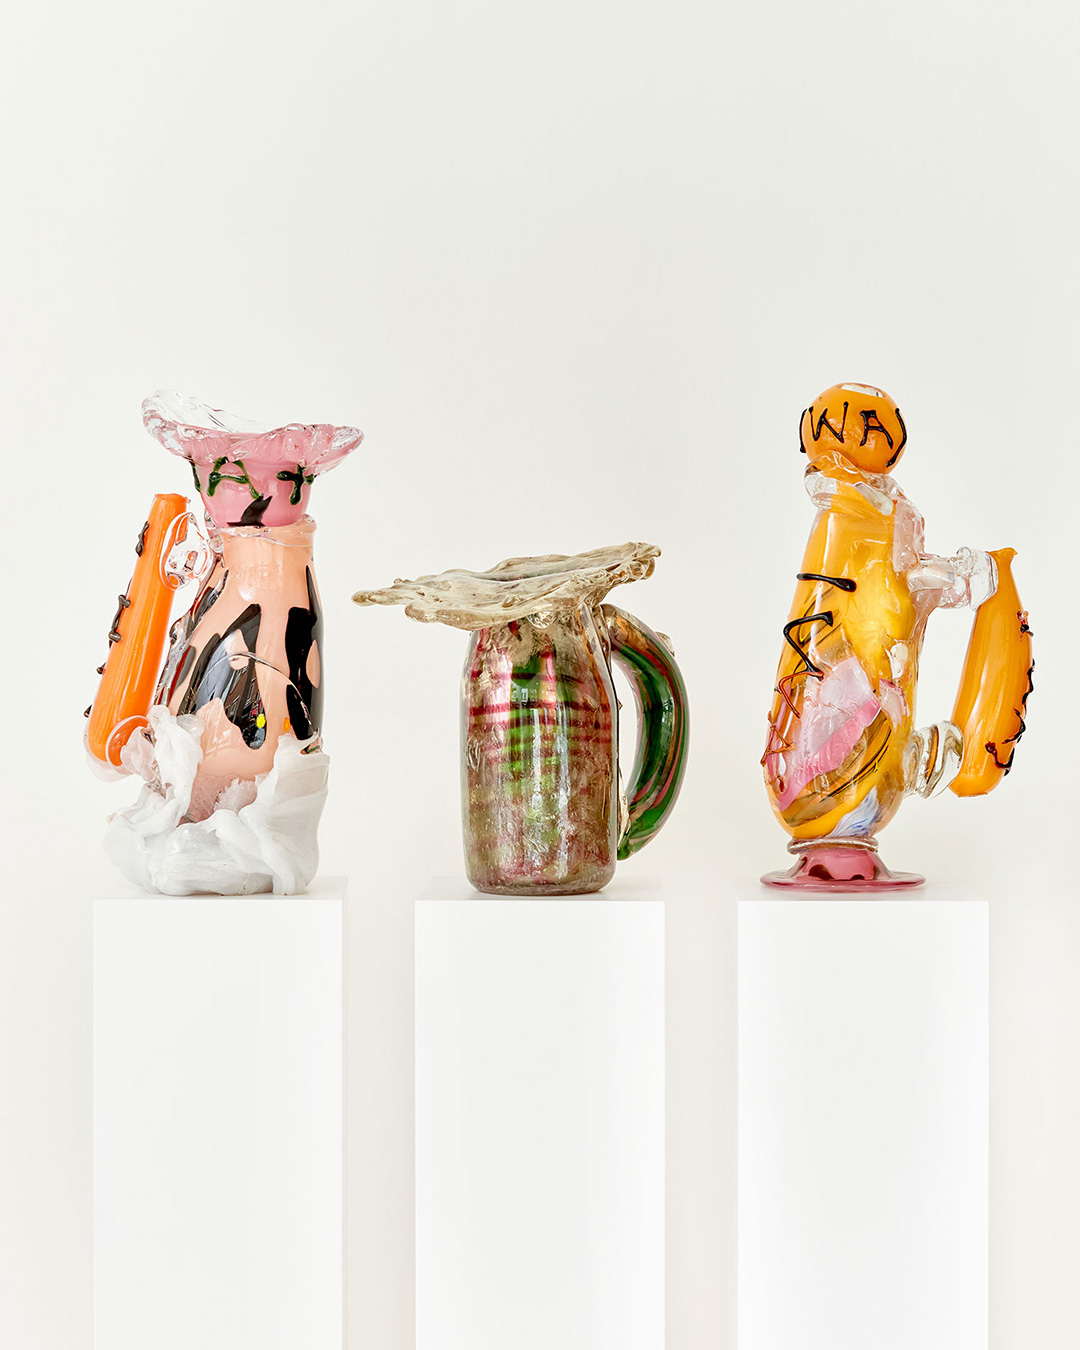 ‘Sculptural ceramic designs showcase diverse materiality